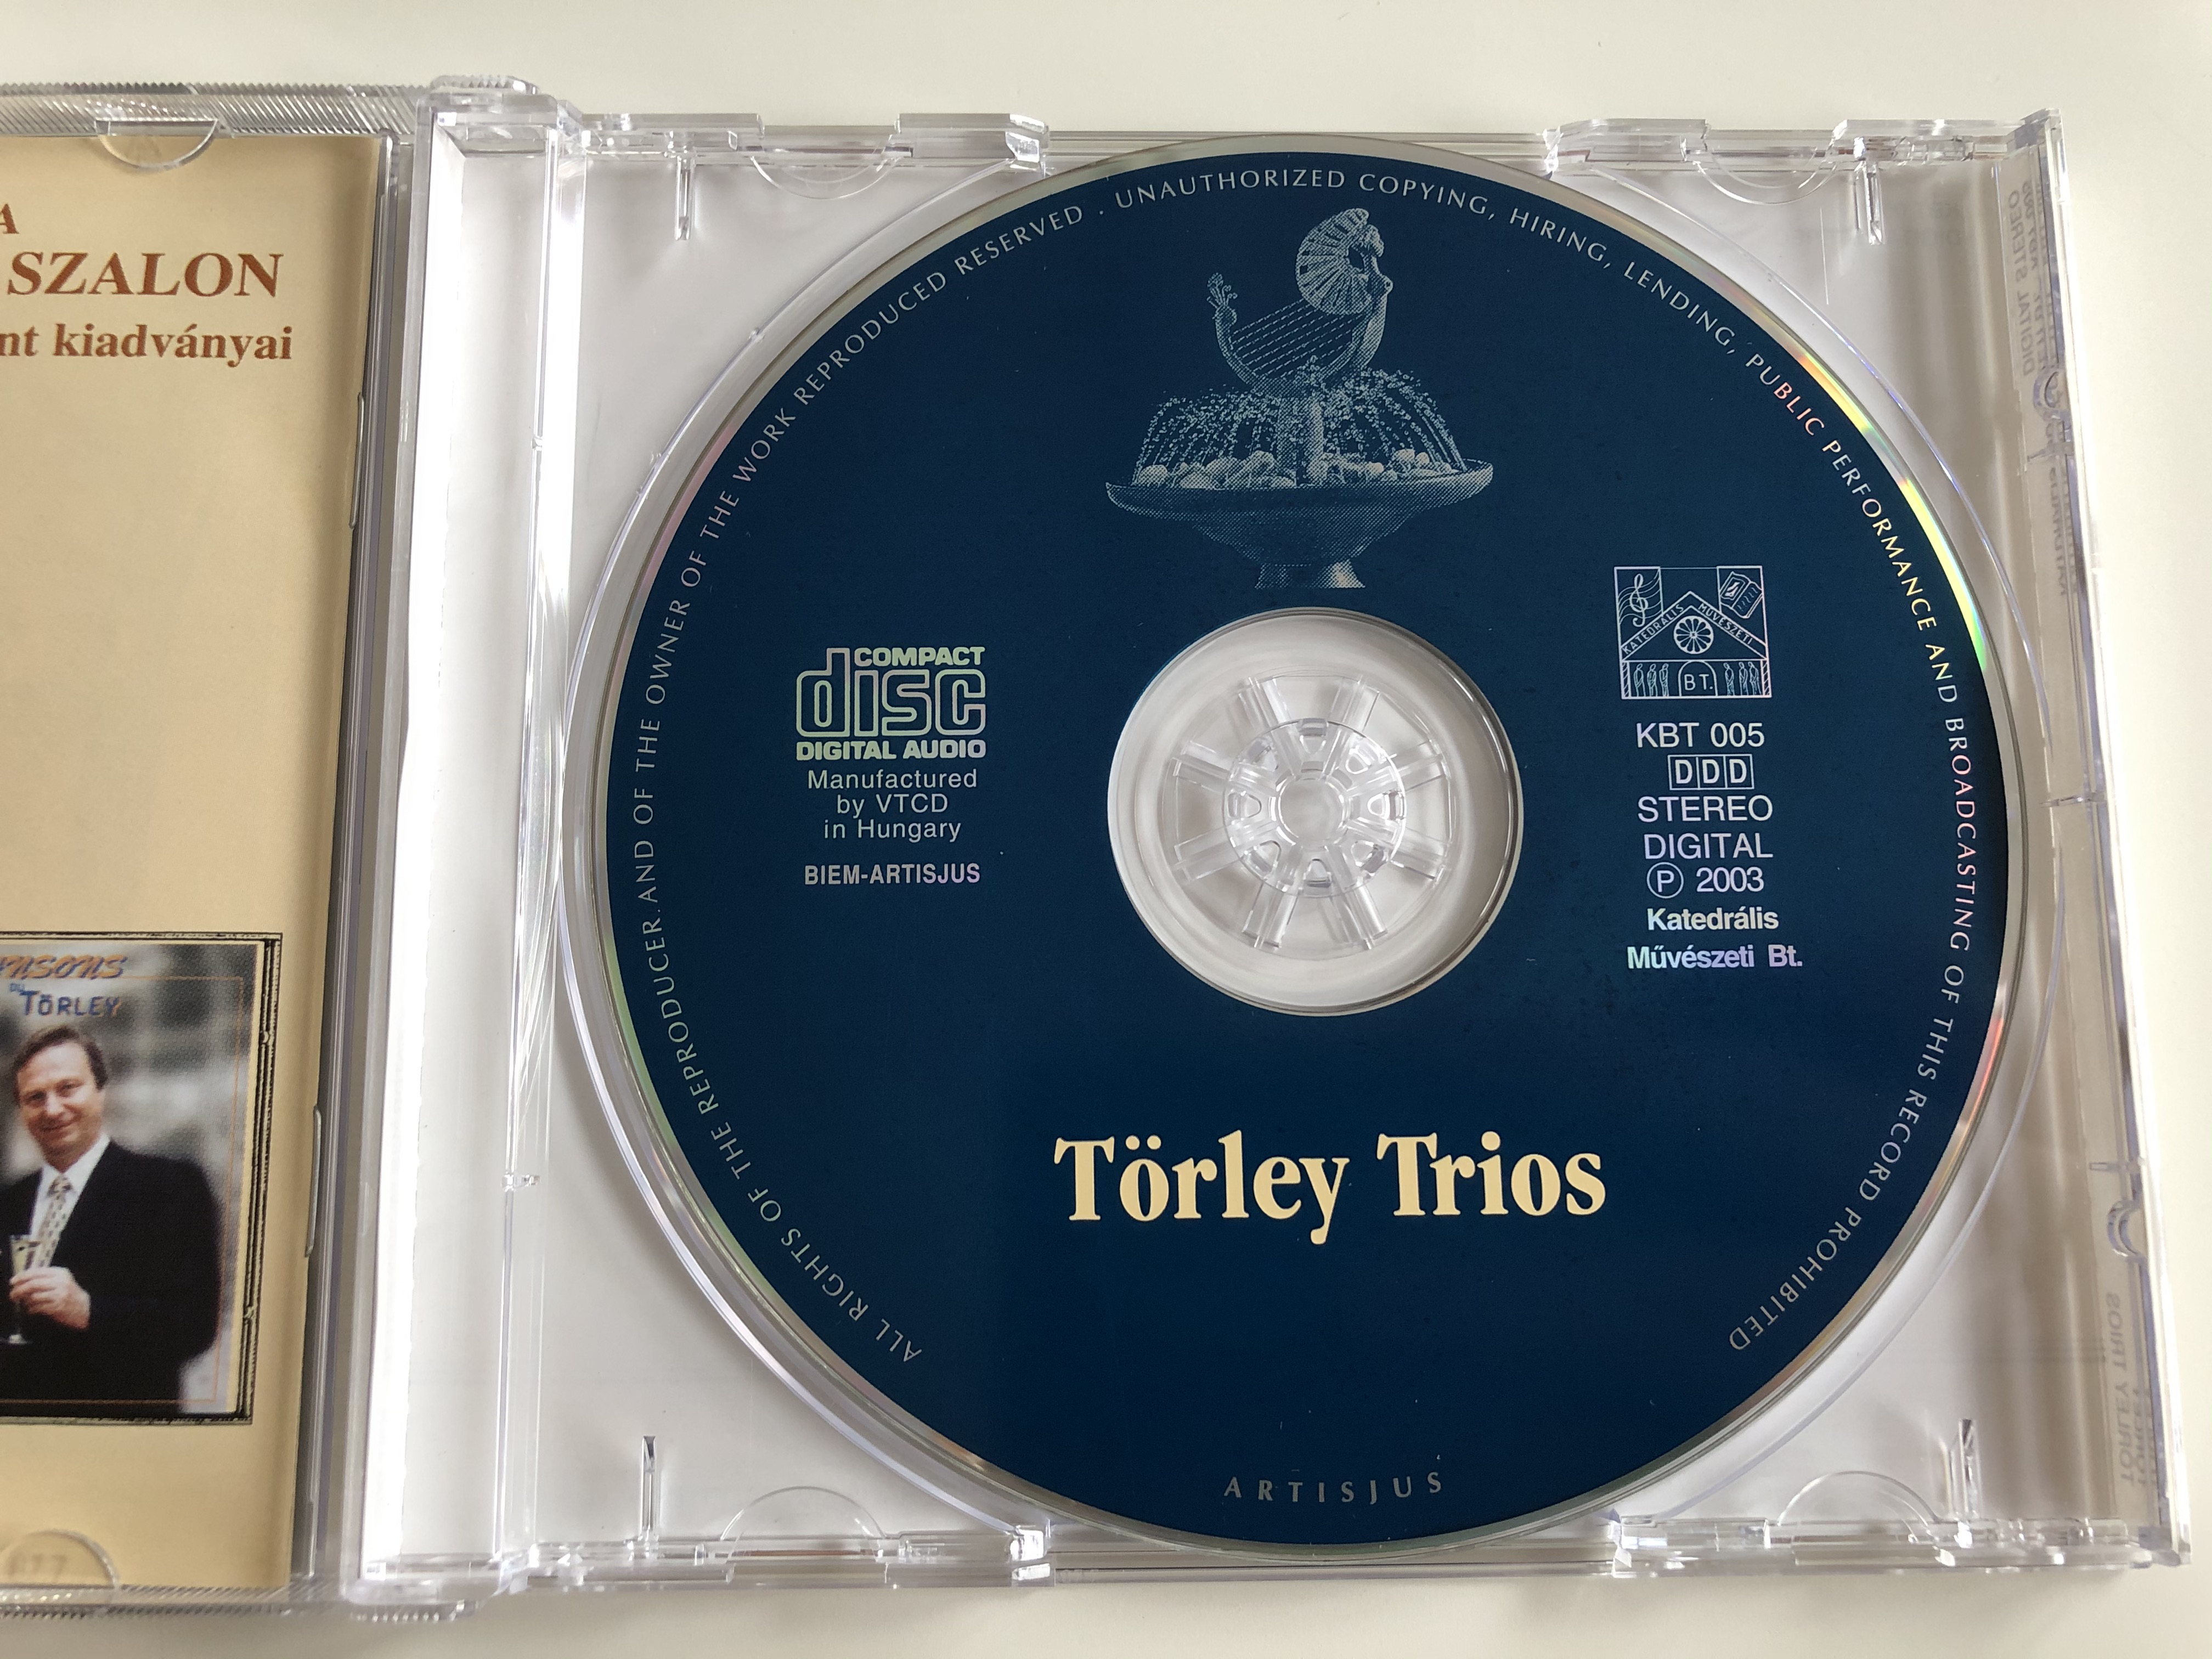 triok-torleyvel-torley-trios-katedralis-muveszeti-bt.-audio-cd-2003-stereo-kbt-005-8-.jpg